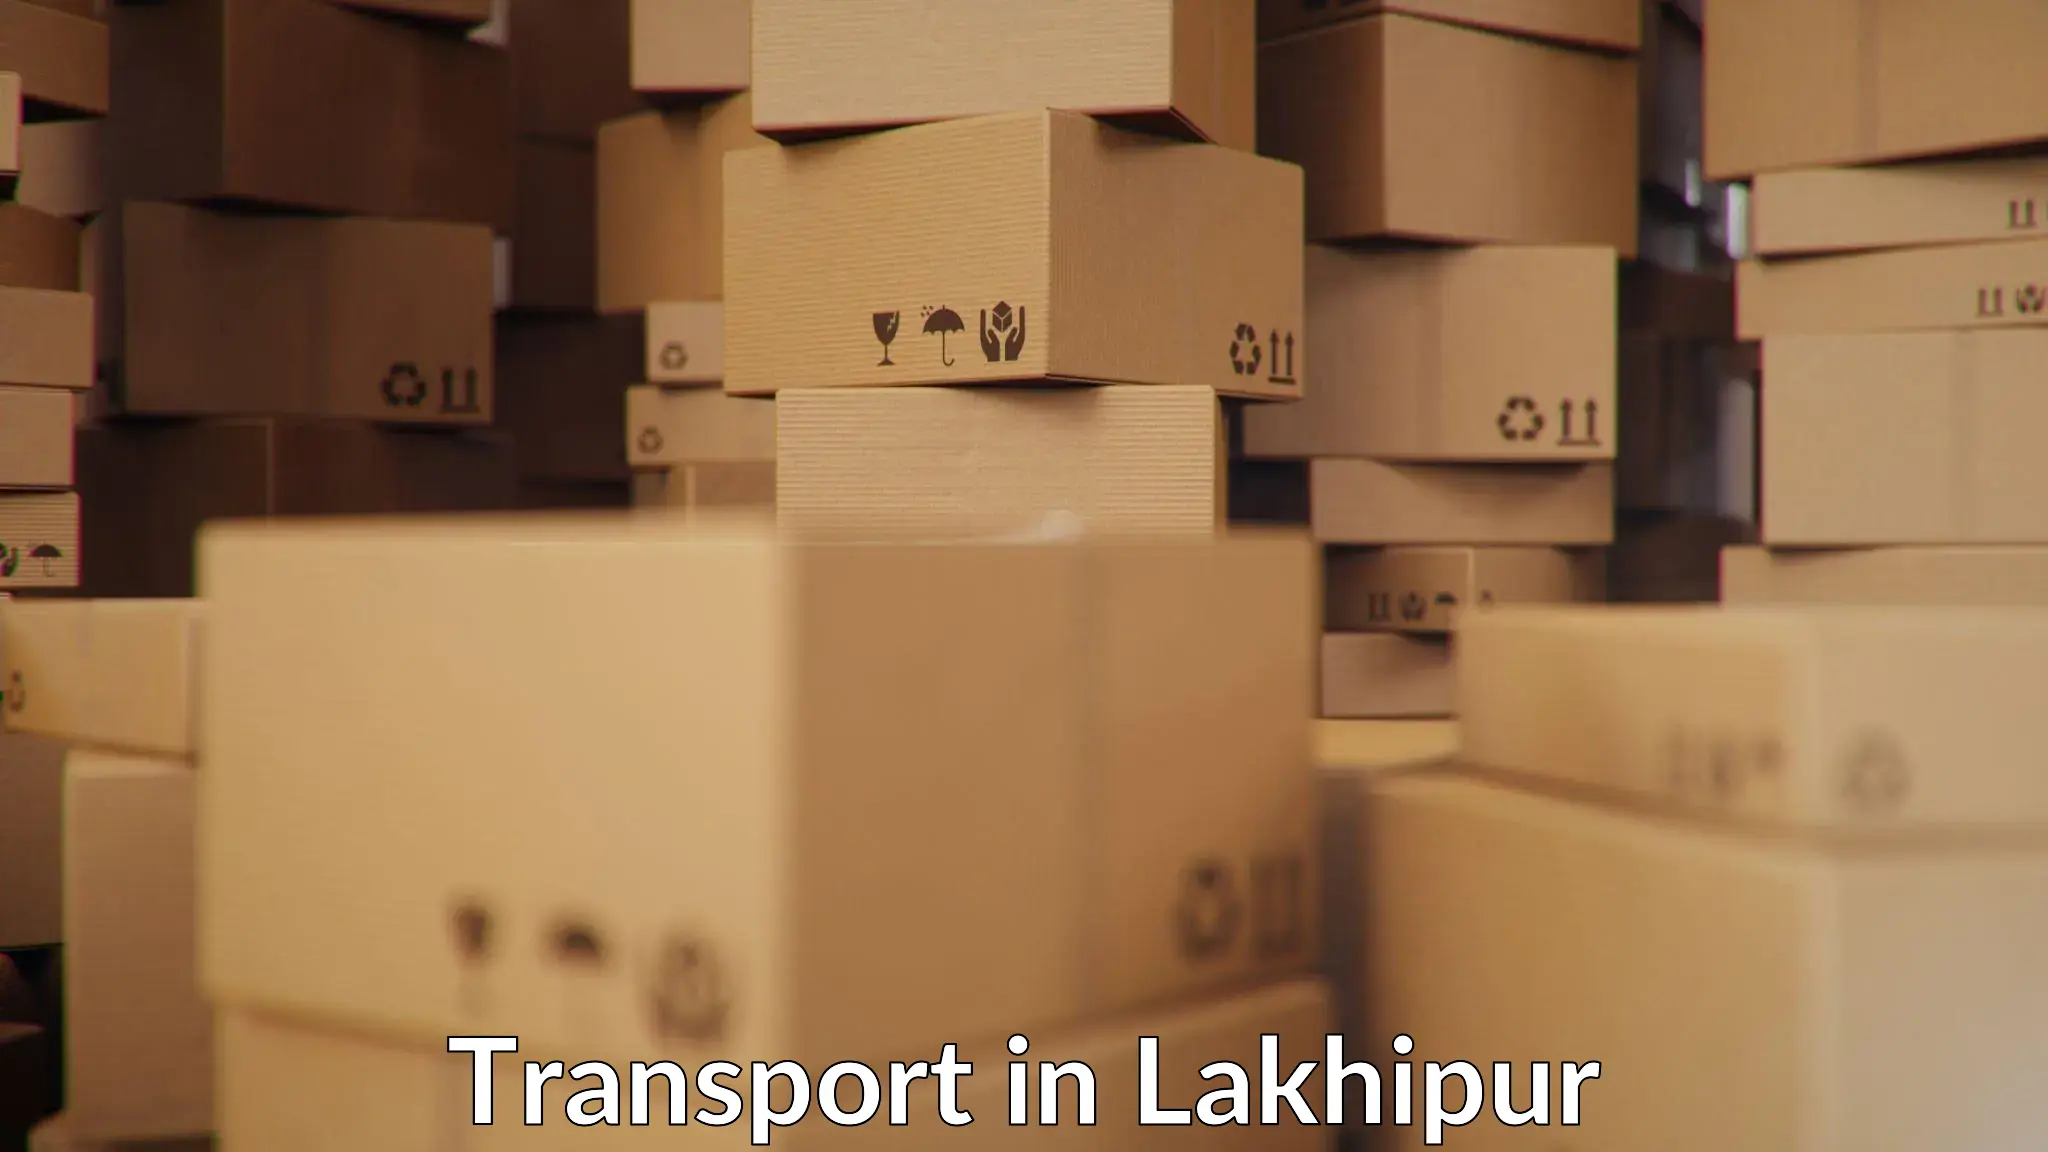 Interstate goods transport in Lakhipur